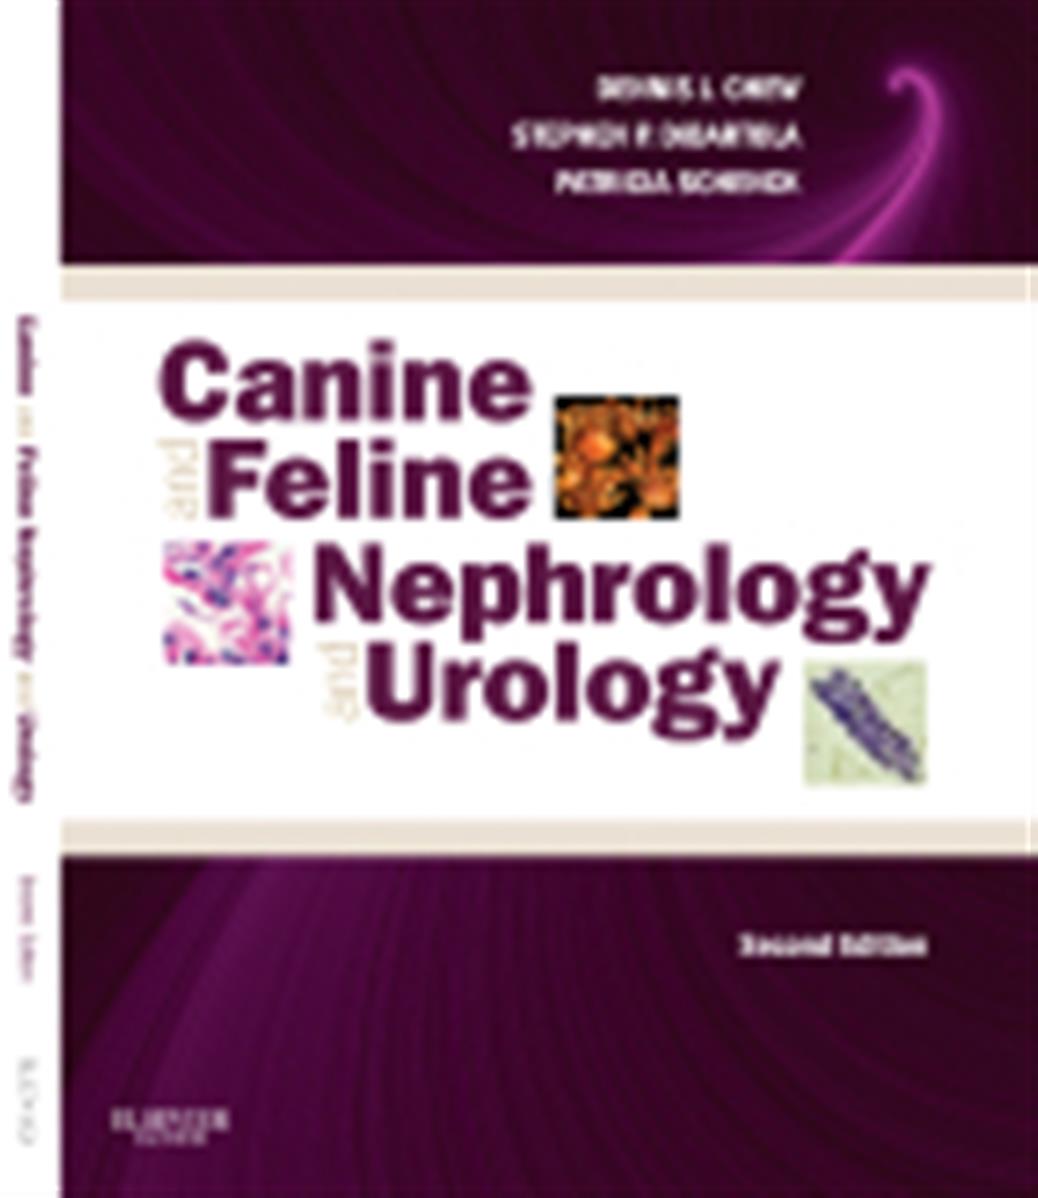 Canine and Feline Nephrology and Urology, 2nd Edition, Saunders